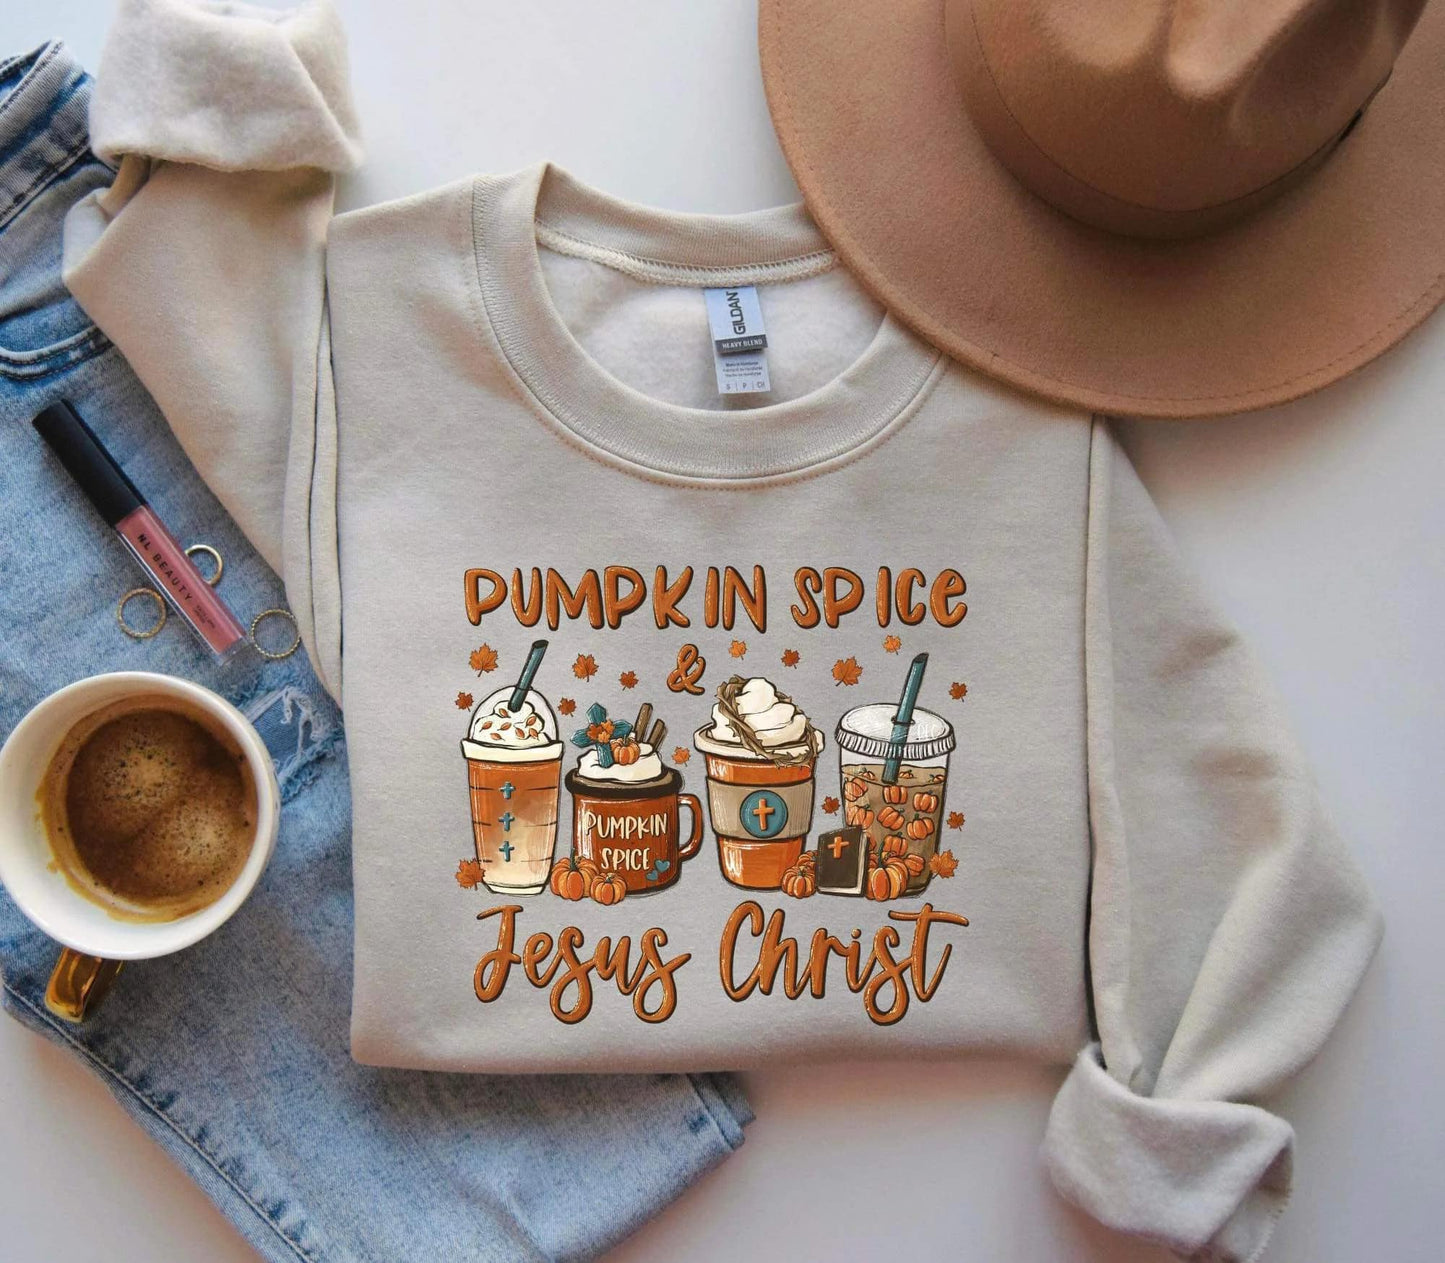 Pumpkin spice and Jesus Christ